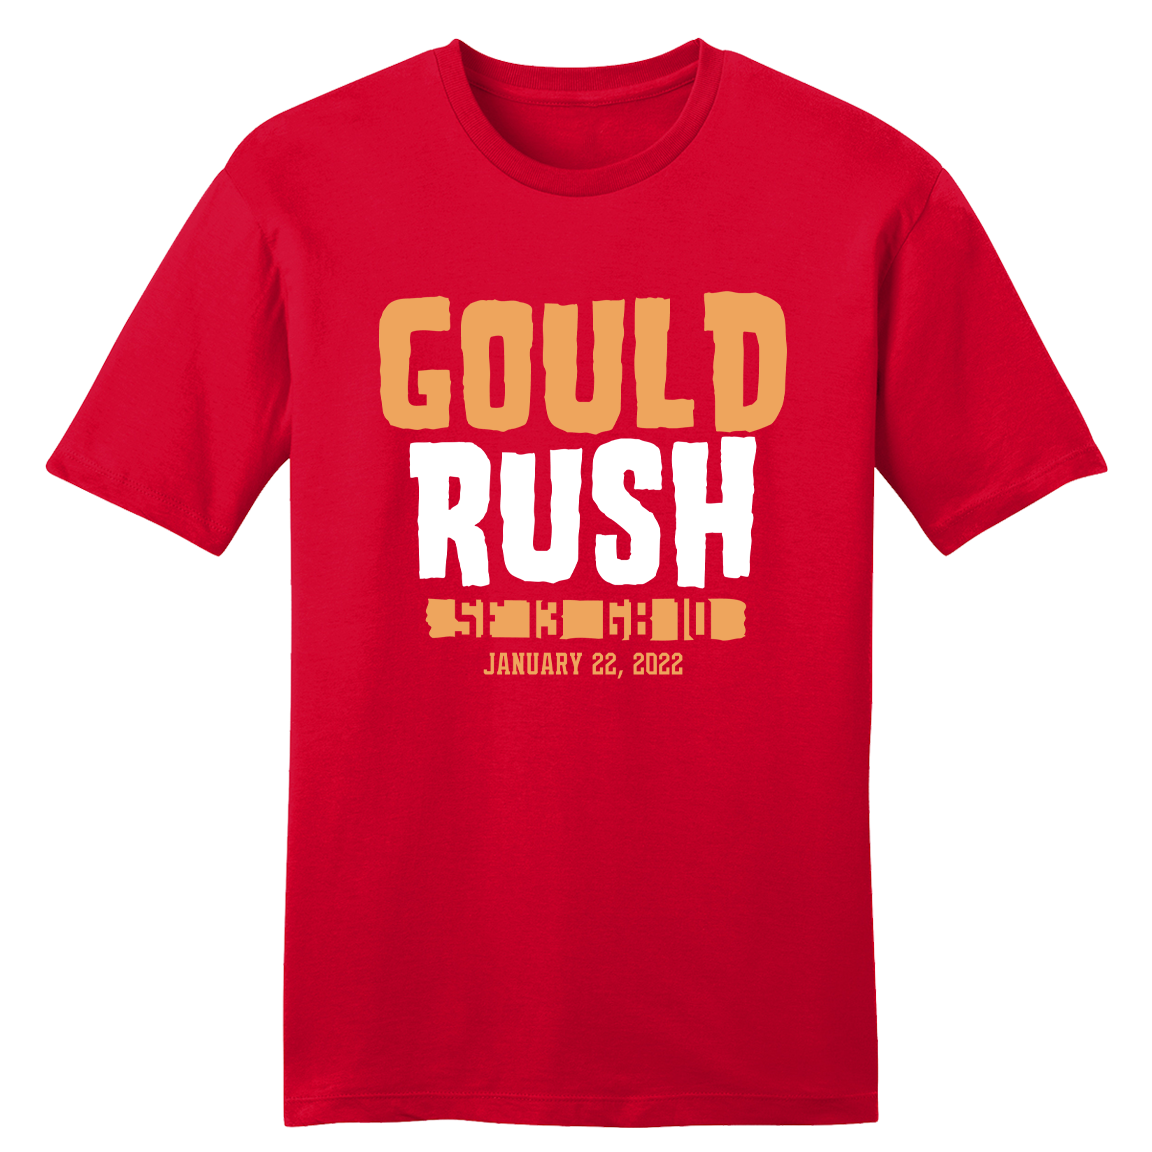 Gould Rush